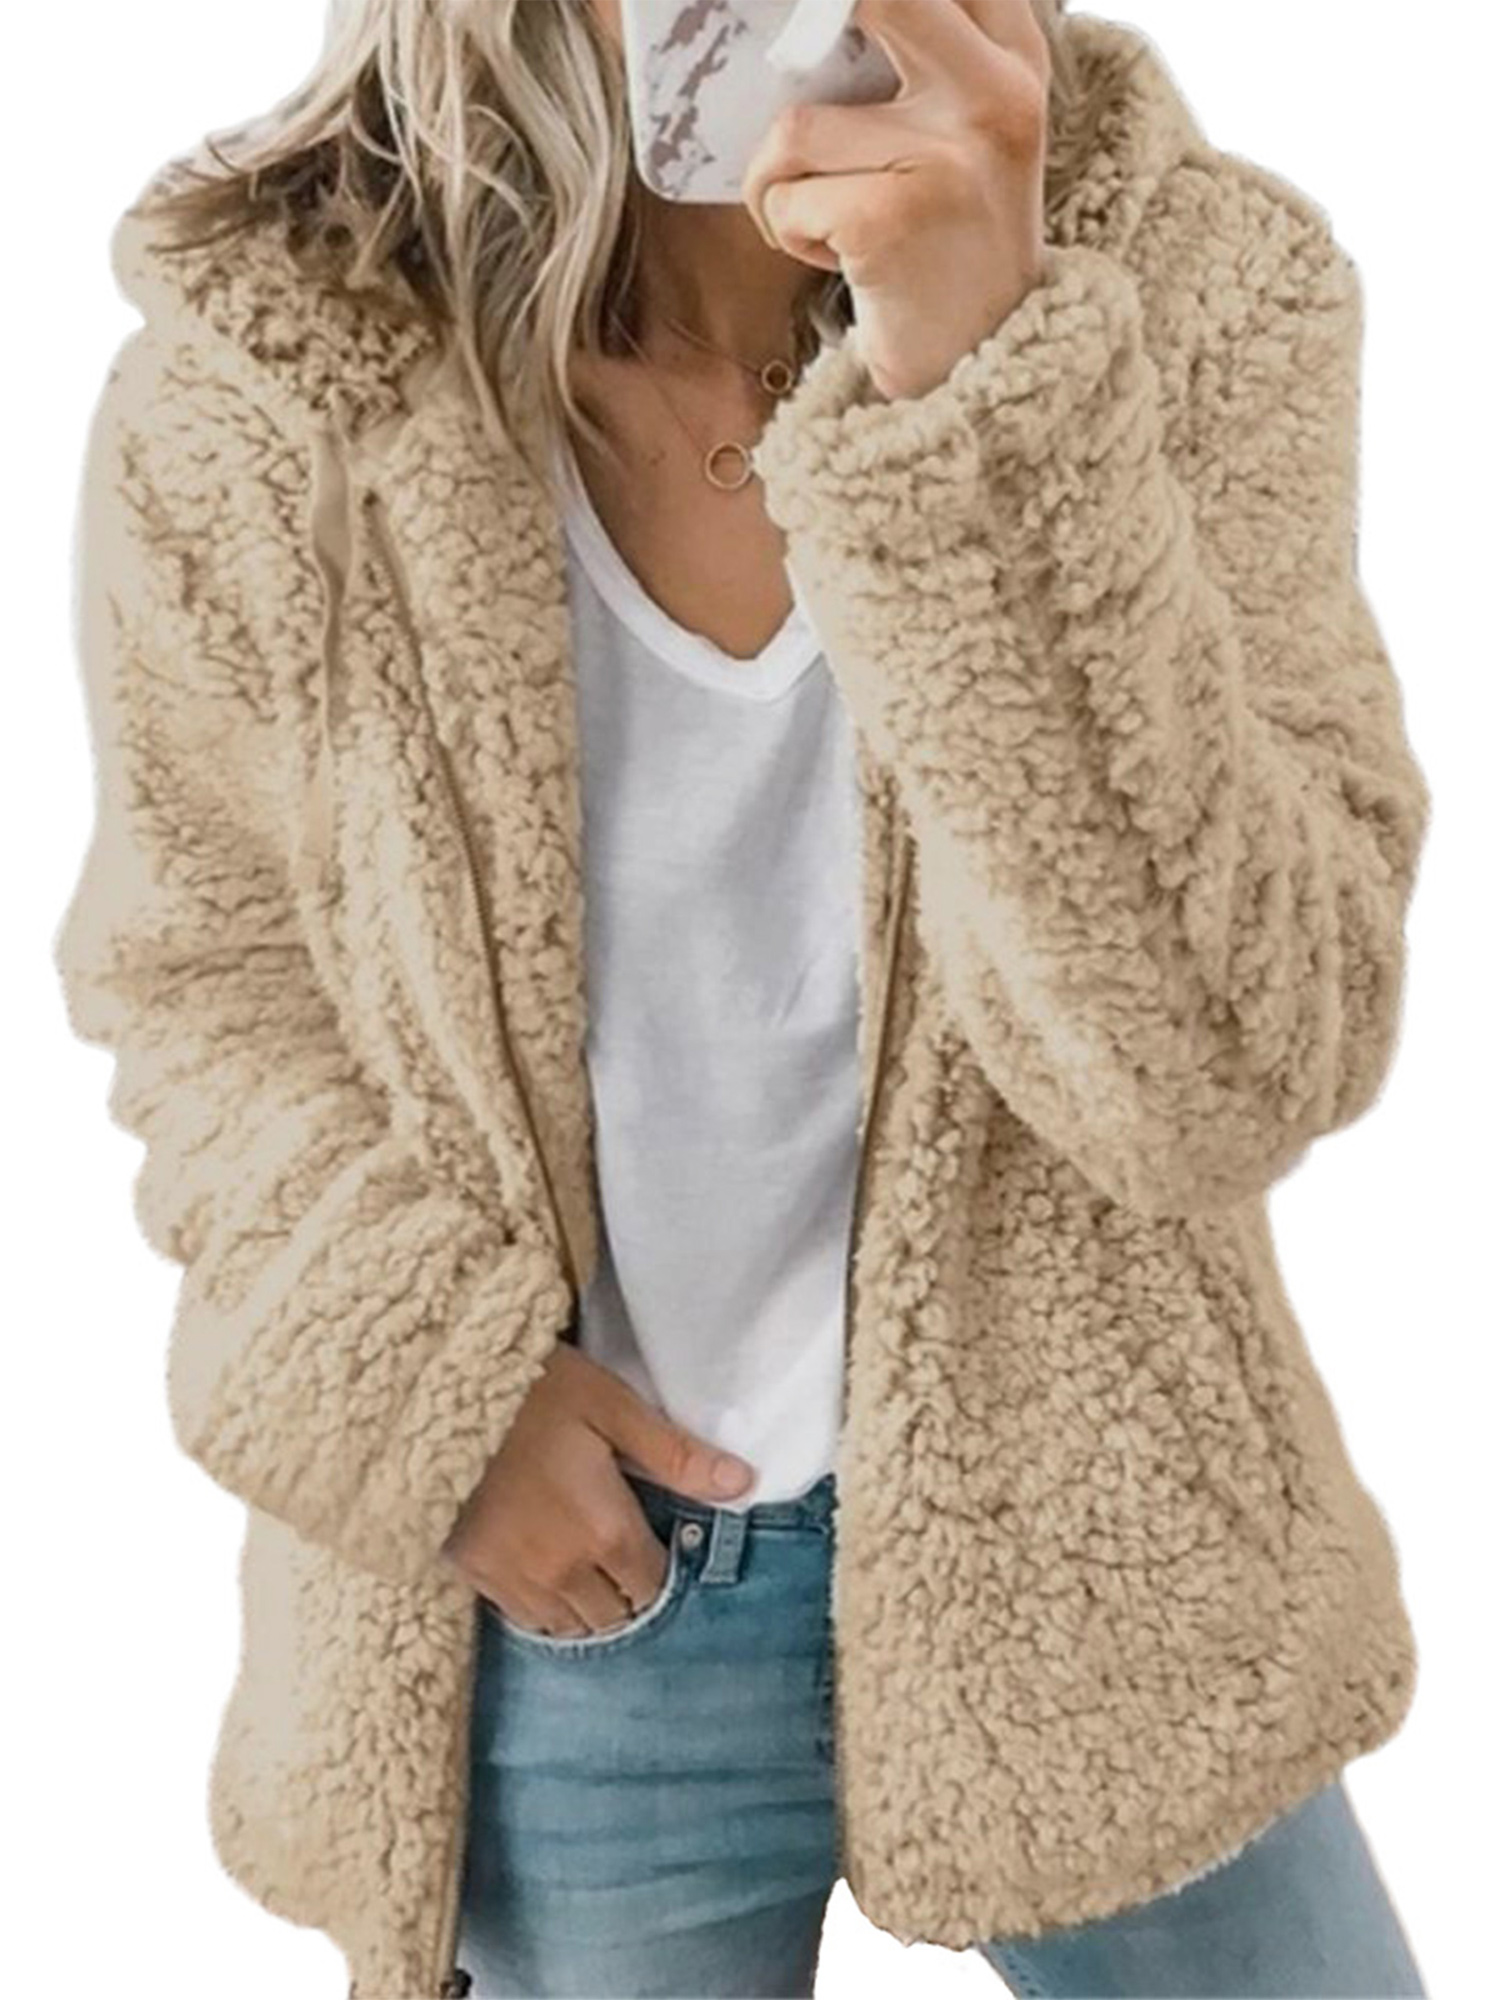 HIMONE Long Sleeve Outerwear for Women Casual Fulffy Fleece Jacket Zip Up Plush Faux Fur Coat Cardigans Hoodies - image 1 of 2